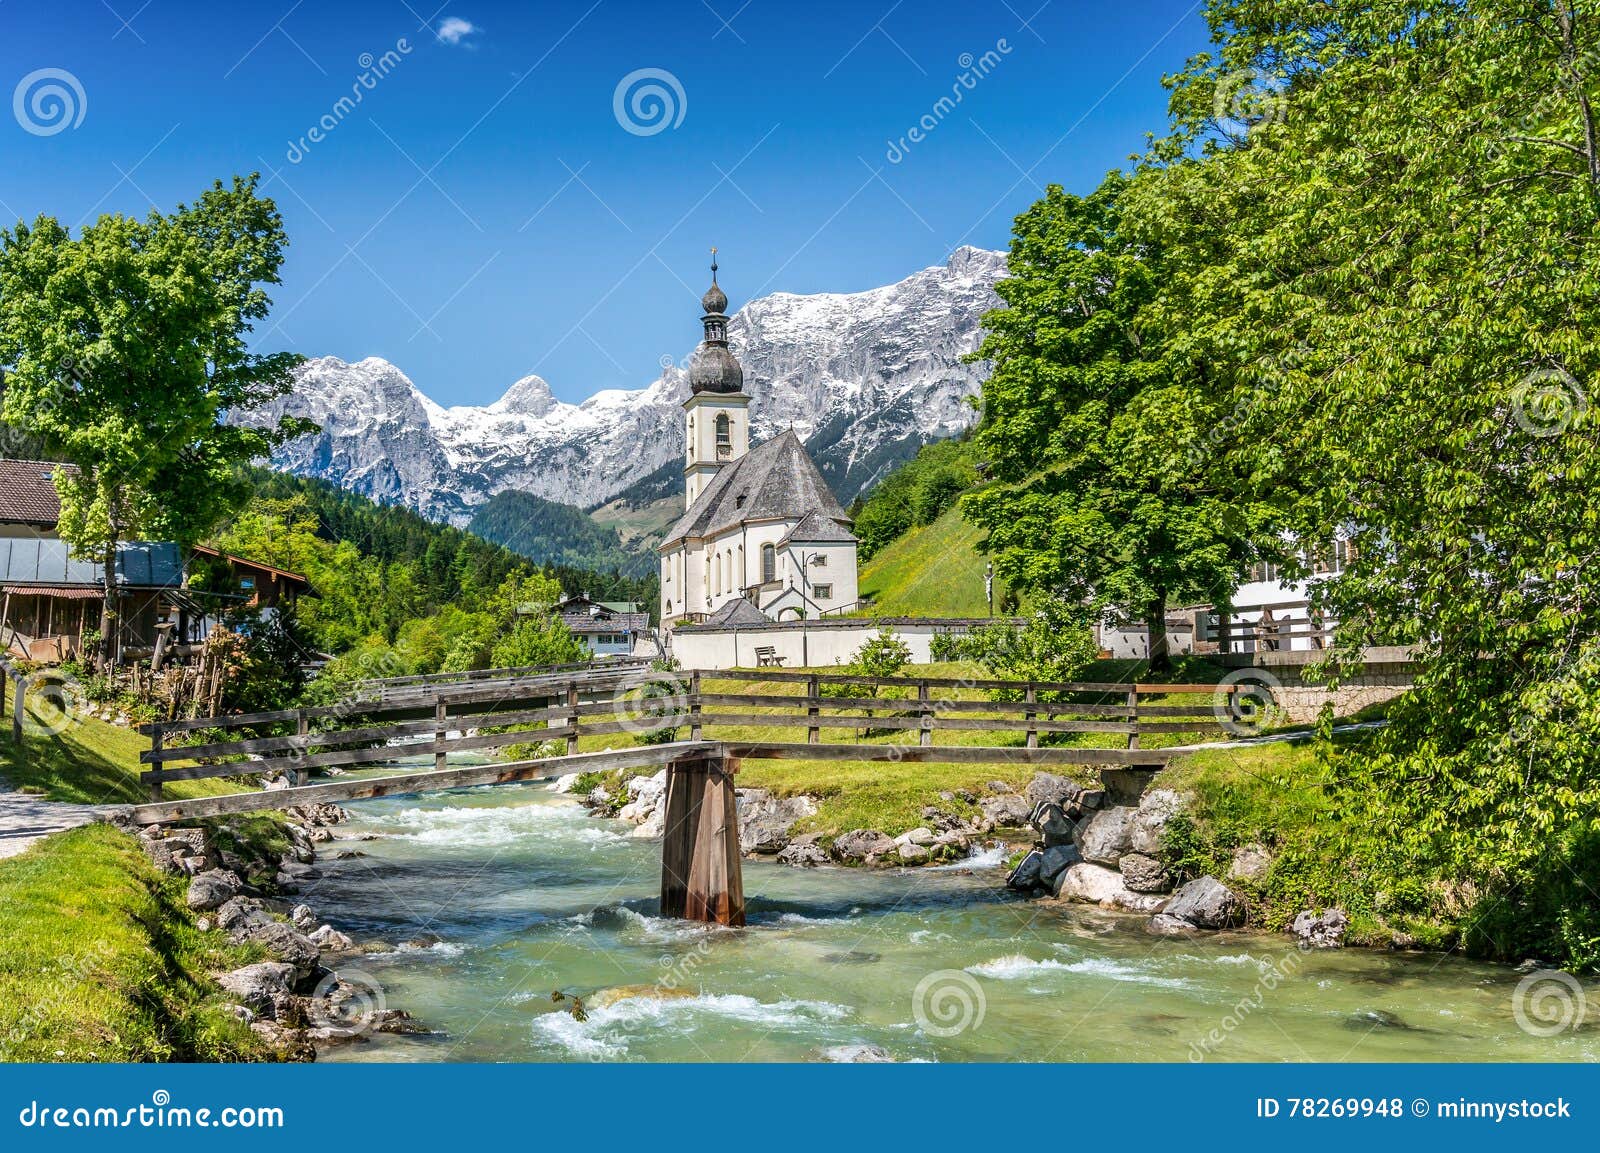 church of ramsau, nationalpark berchtesgadener land, bavaria, germany